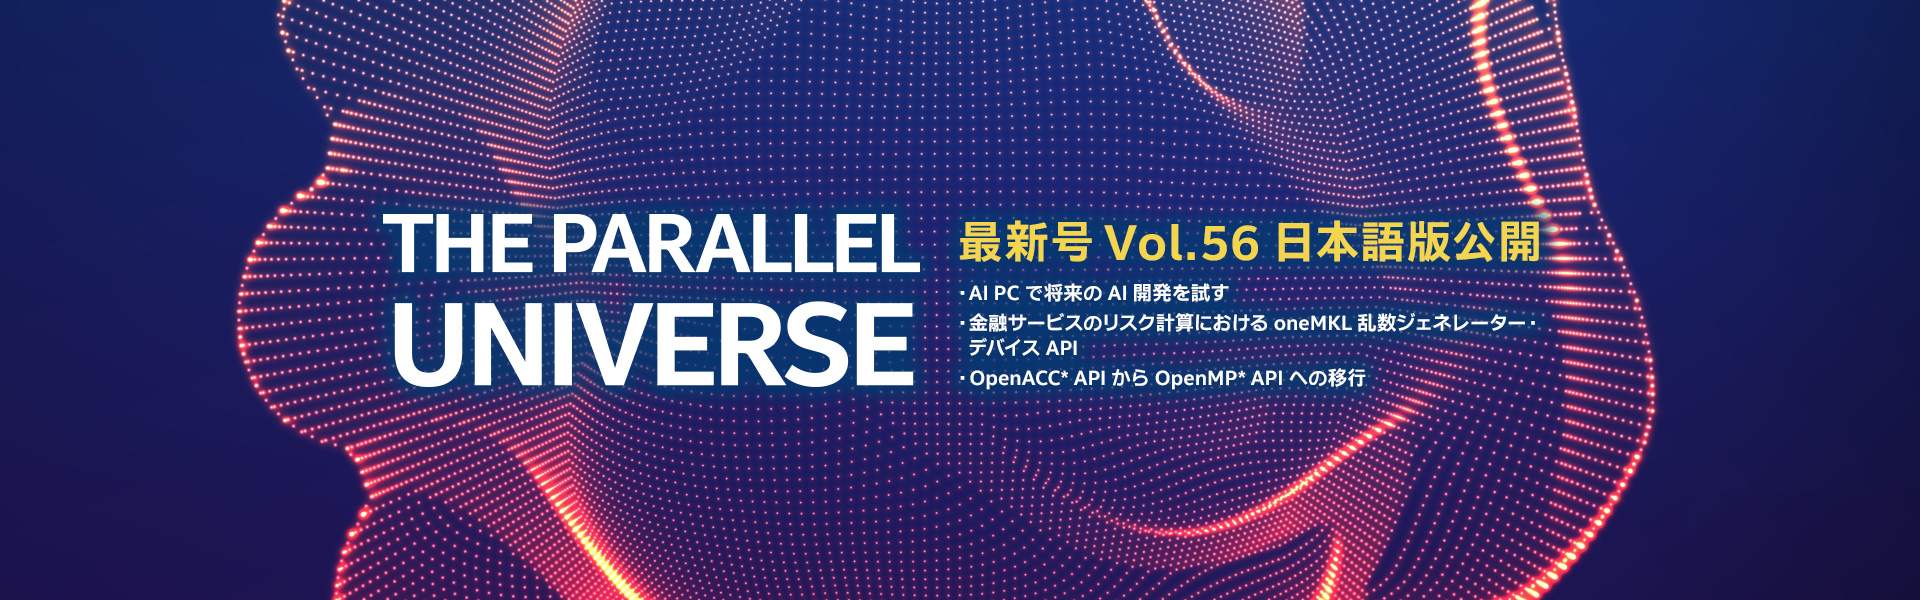 The Parallel Universe 最新号 Vol.56 日本語版公開中